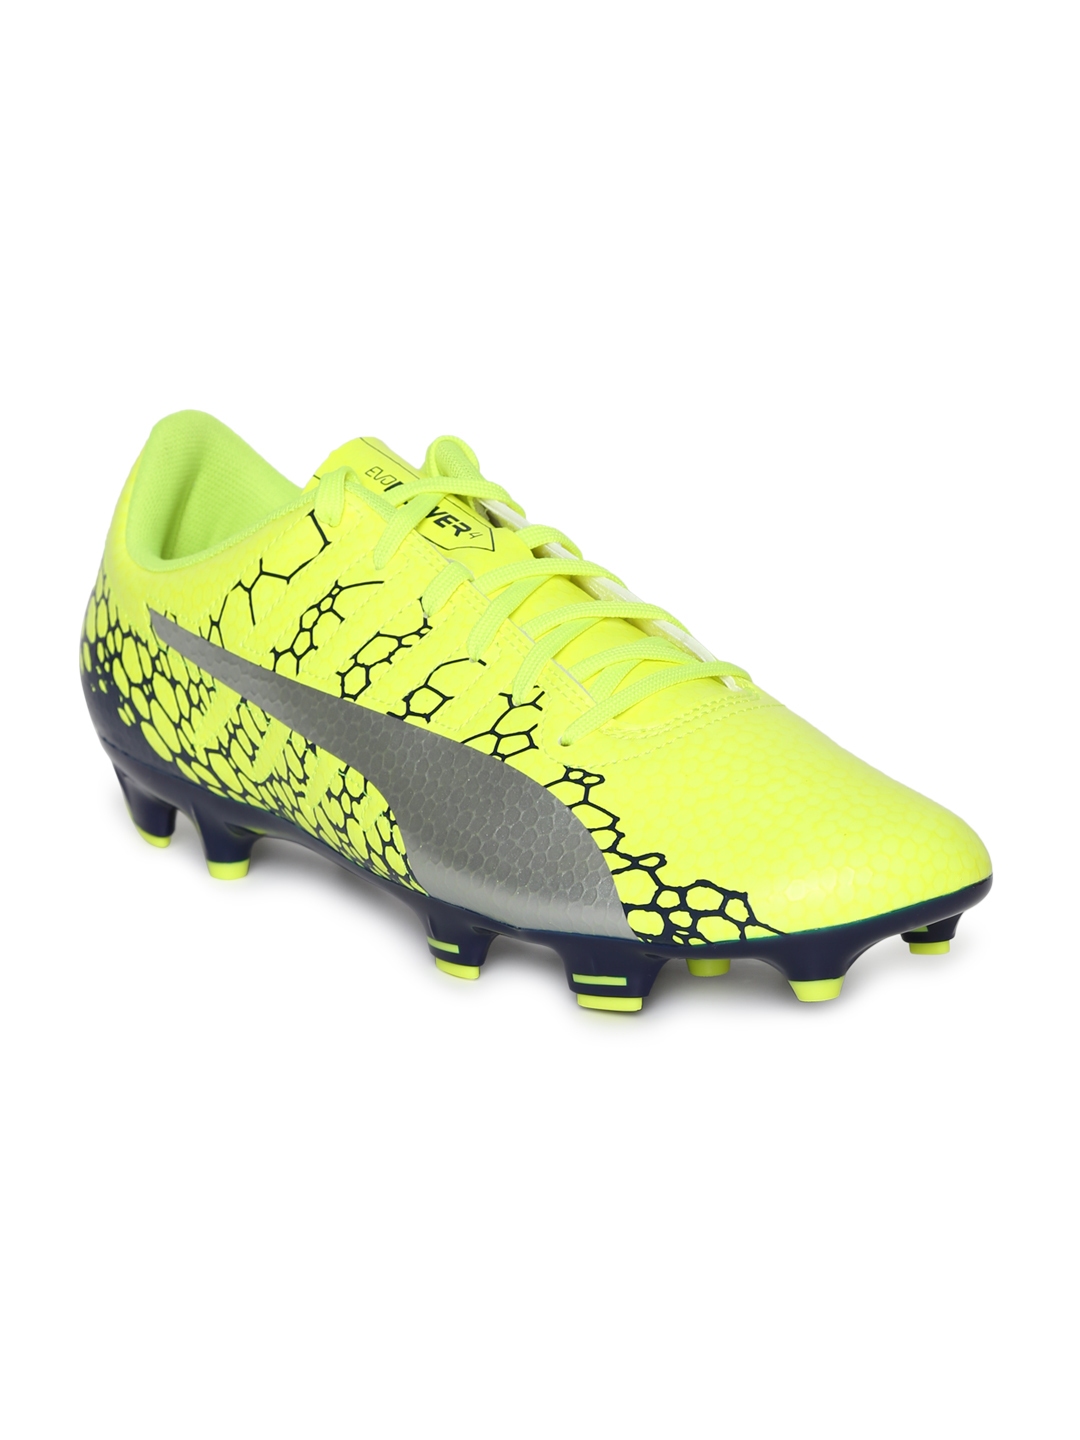 puma football shoes myntra